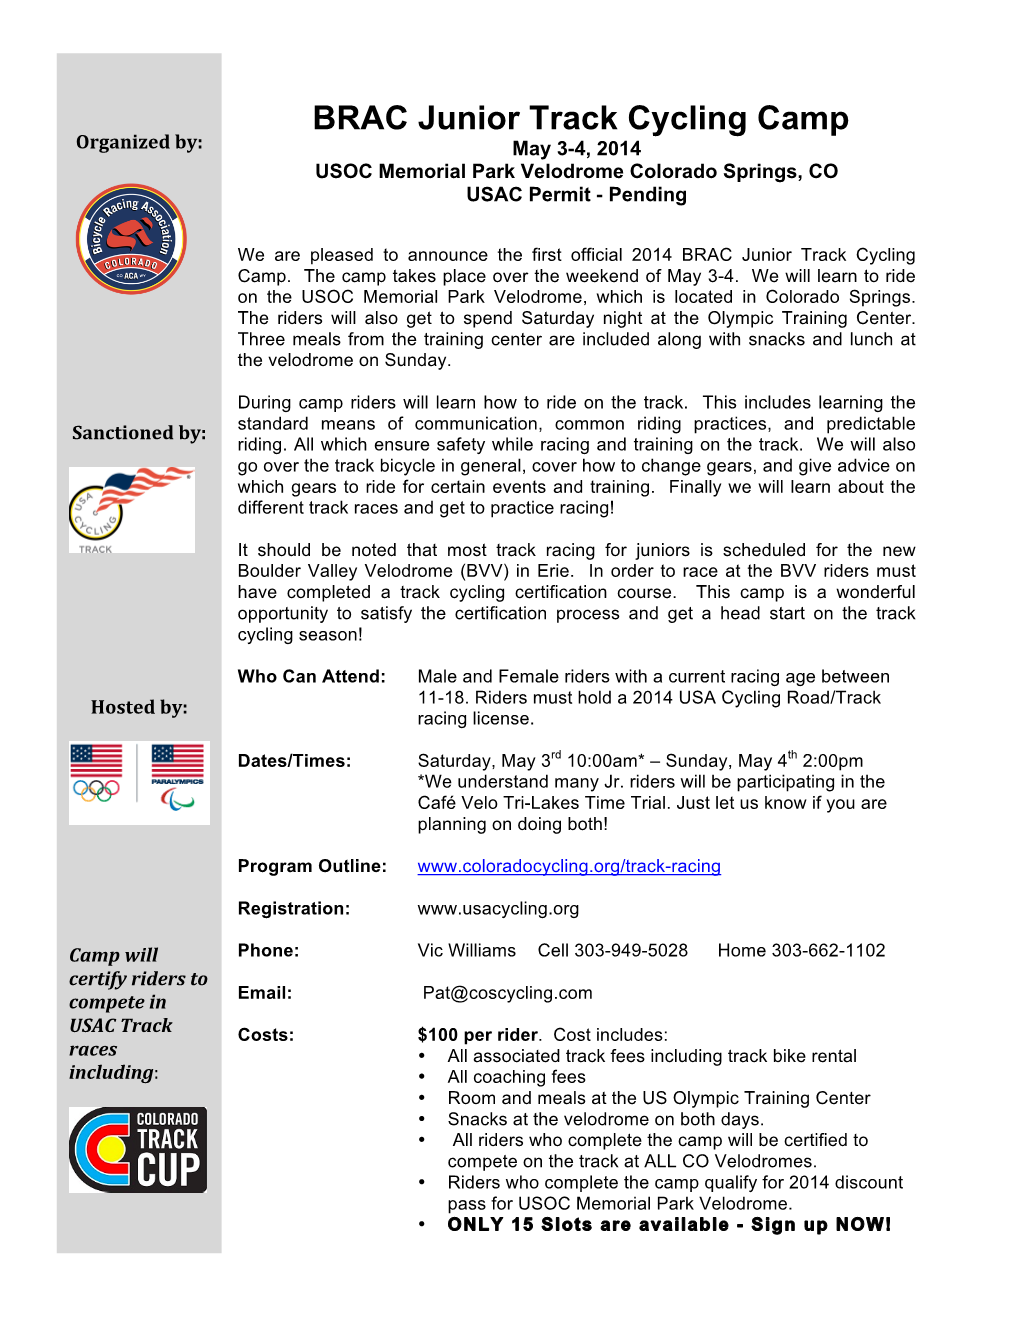 BRAC Junior Track Cycling Camp  May 3-4, 2014  USOC Memorial Park Velodrome Colorado Springs, CO USAC Permit - Pending